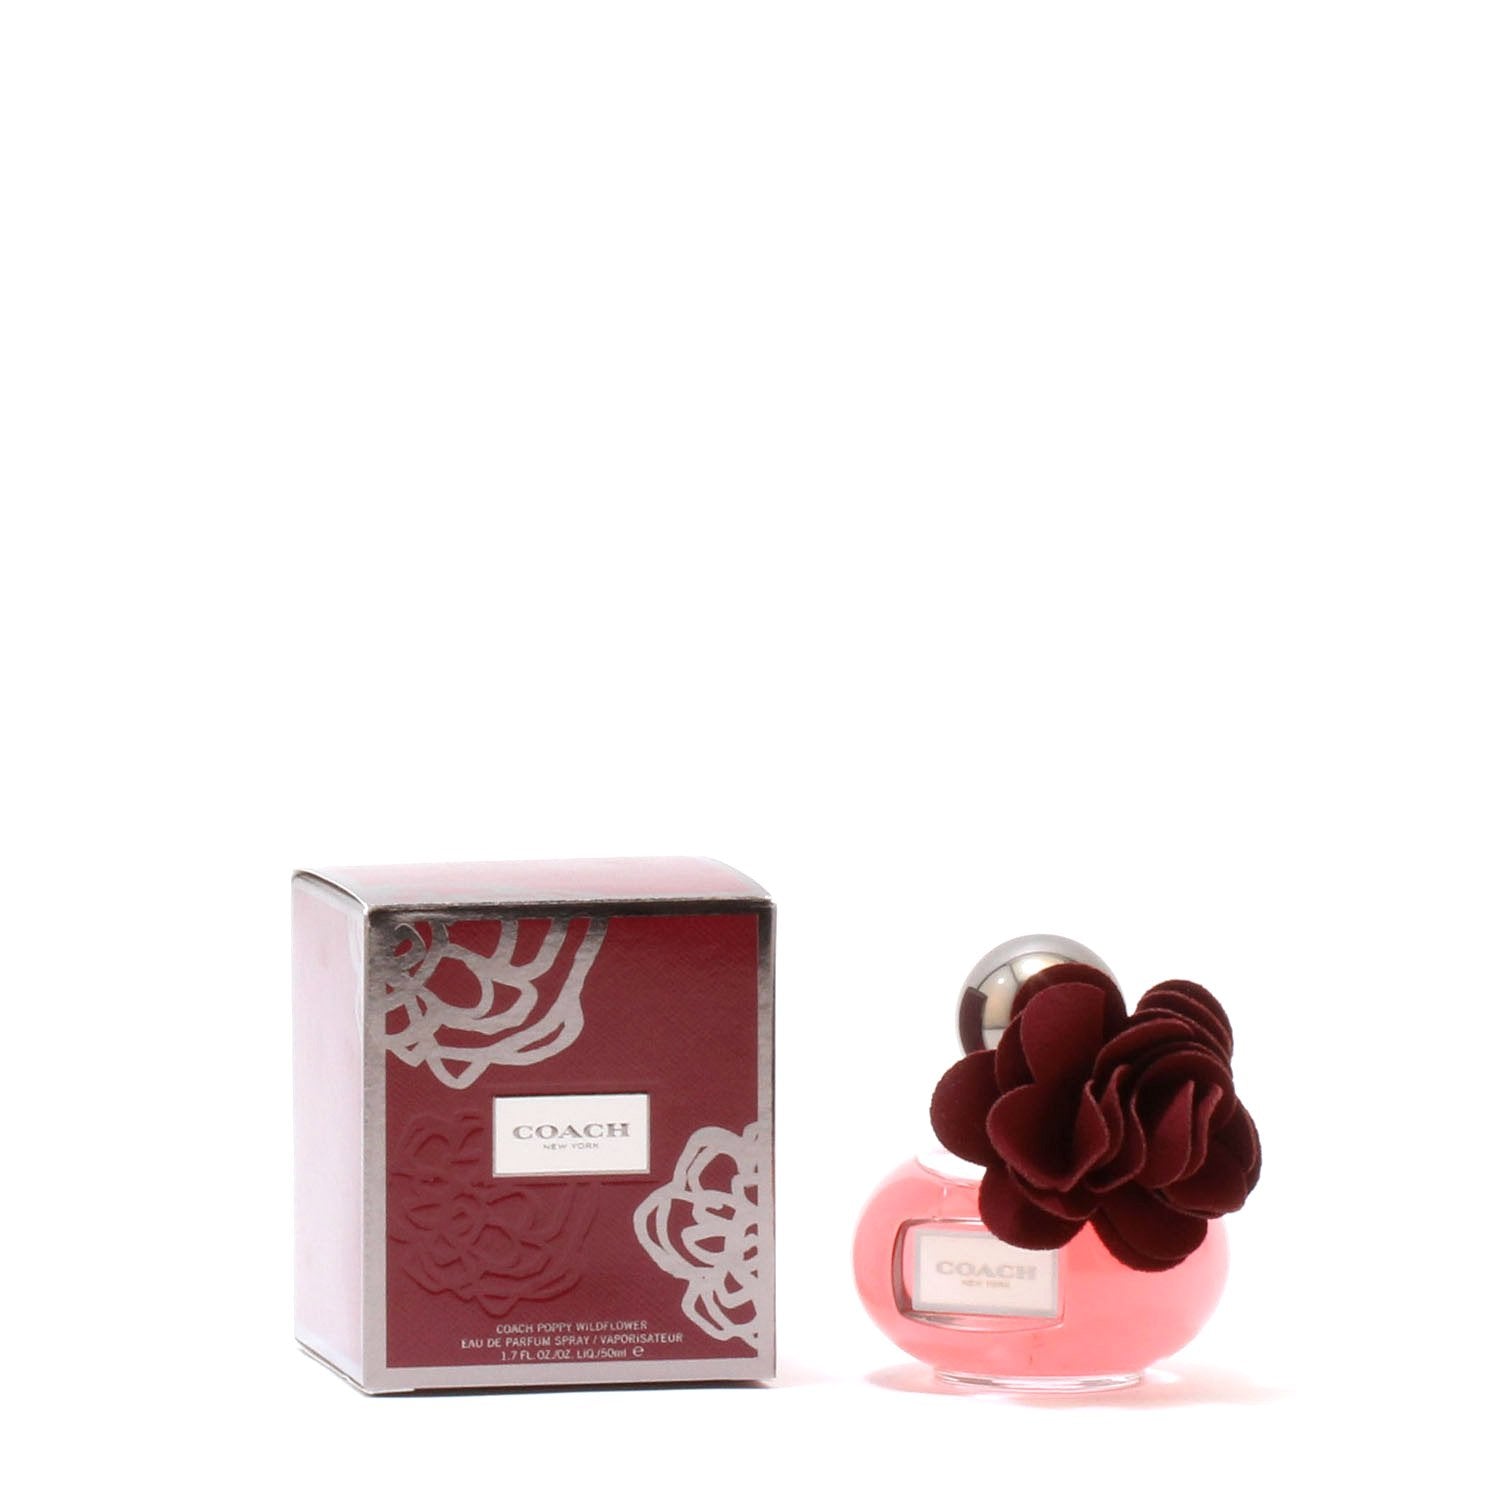 Perfume - COACH WILDFLOWER FOR WOMEN - EAU DE PARFUM SPRAY